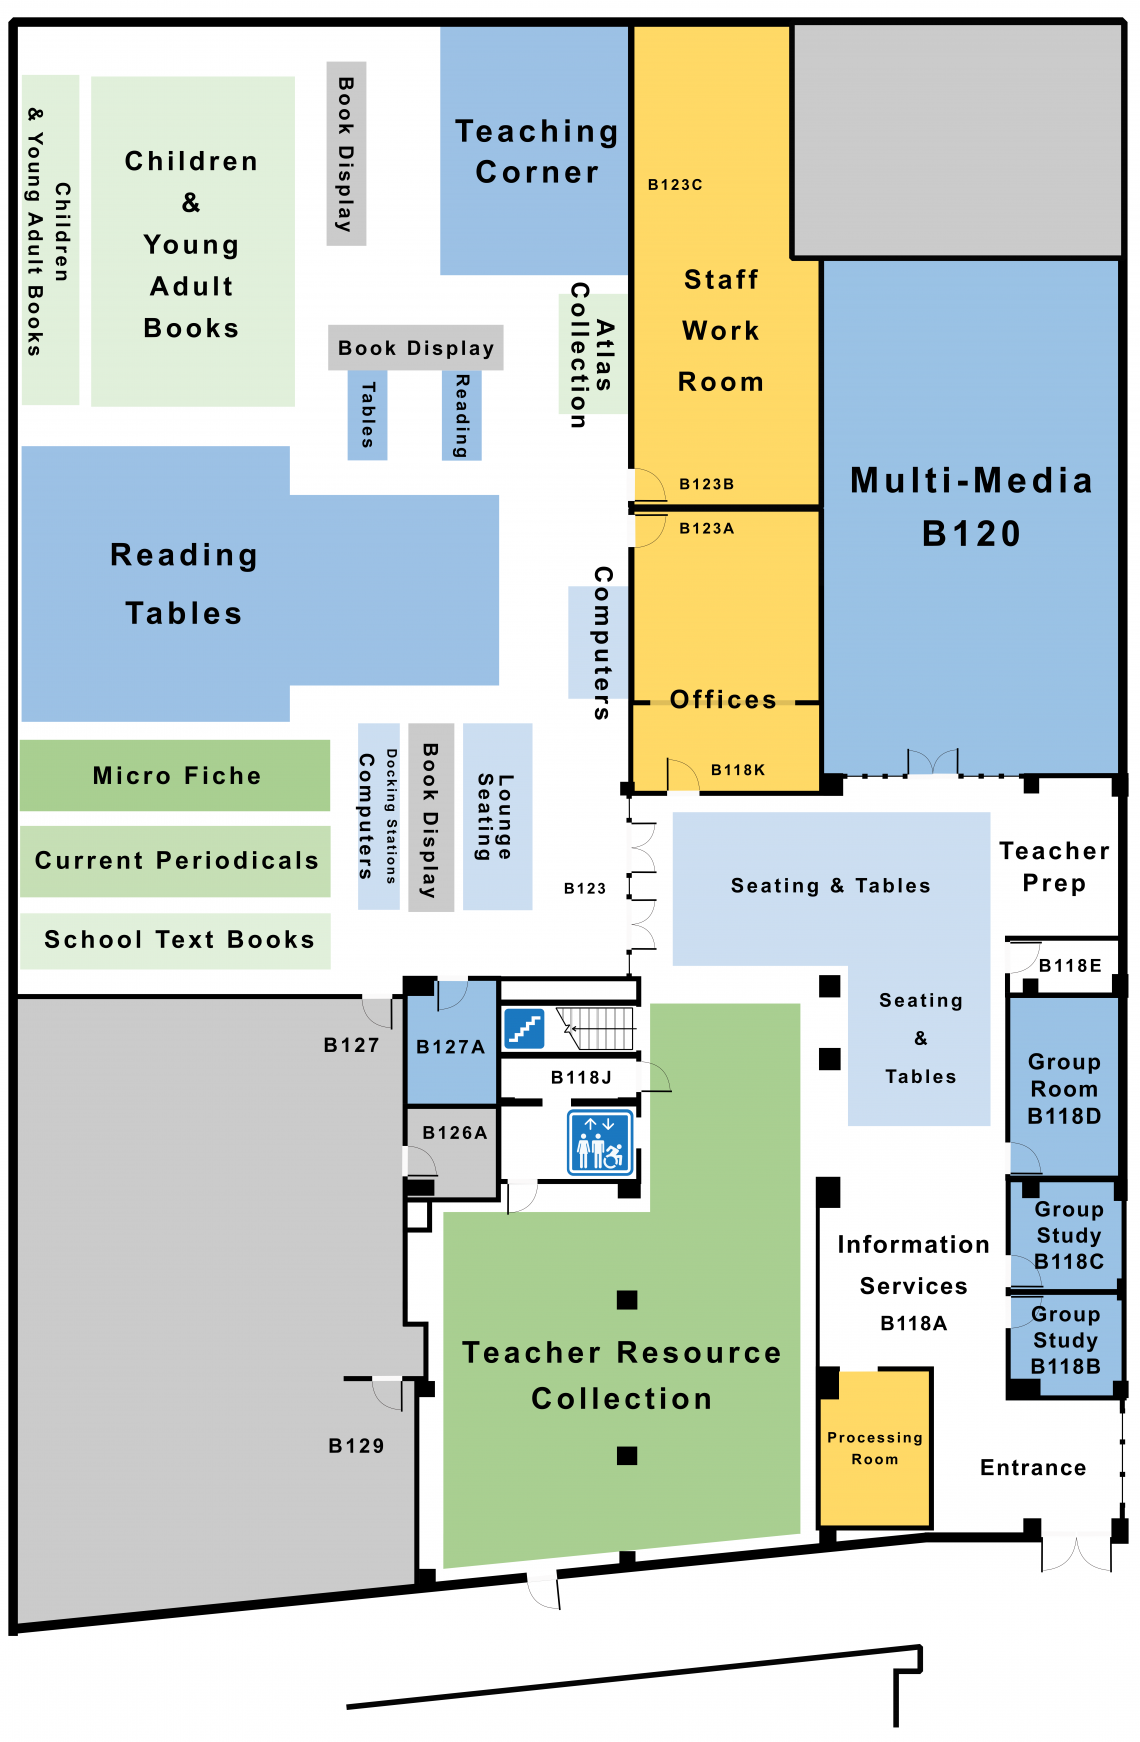 Bracken Health Sciences Library main level floorplan